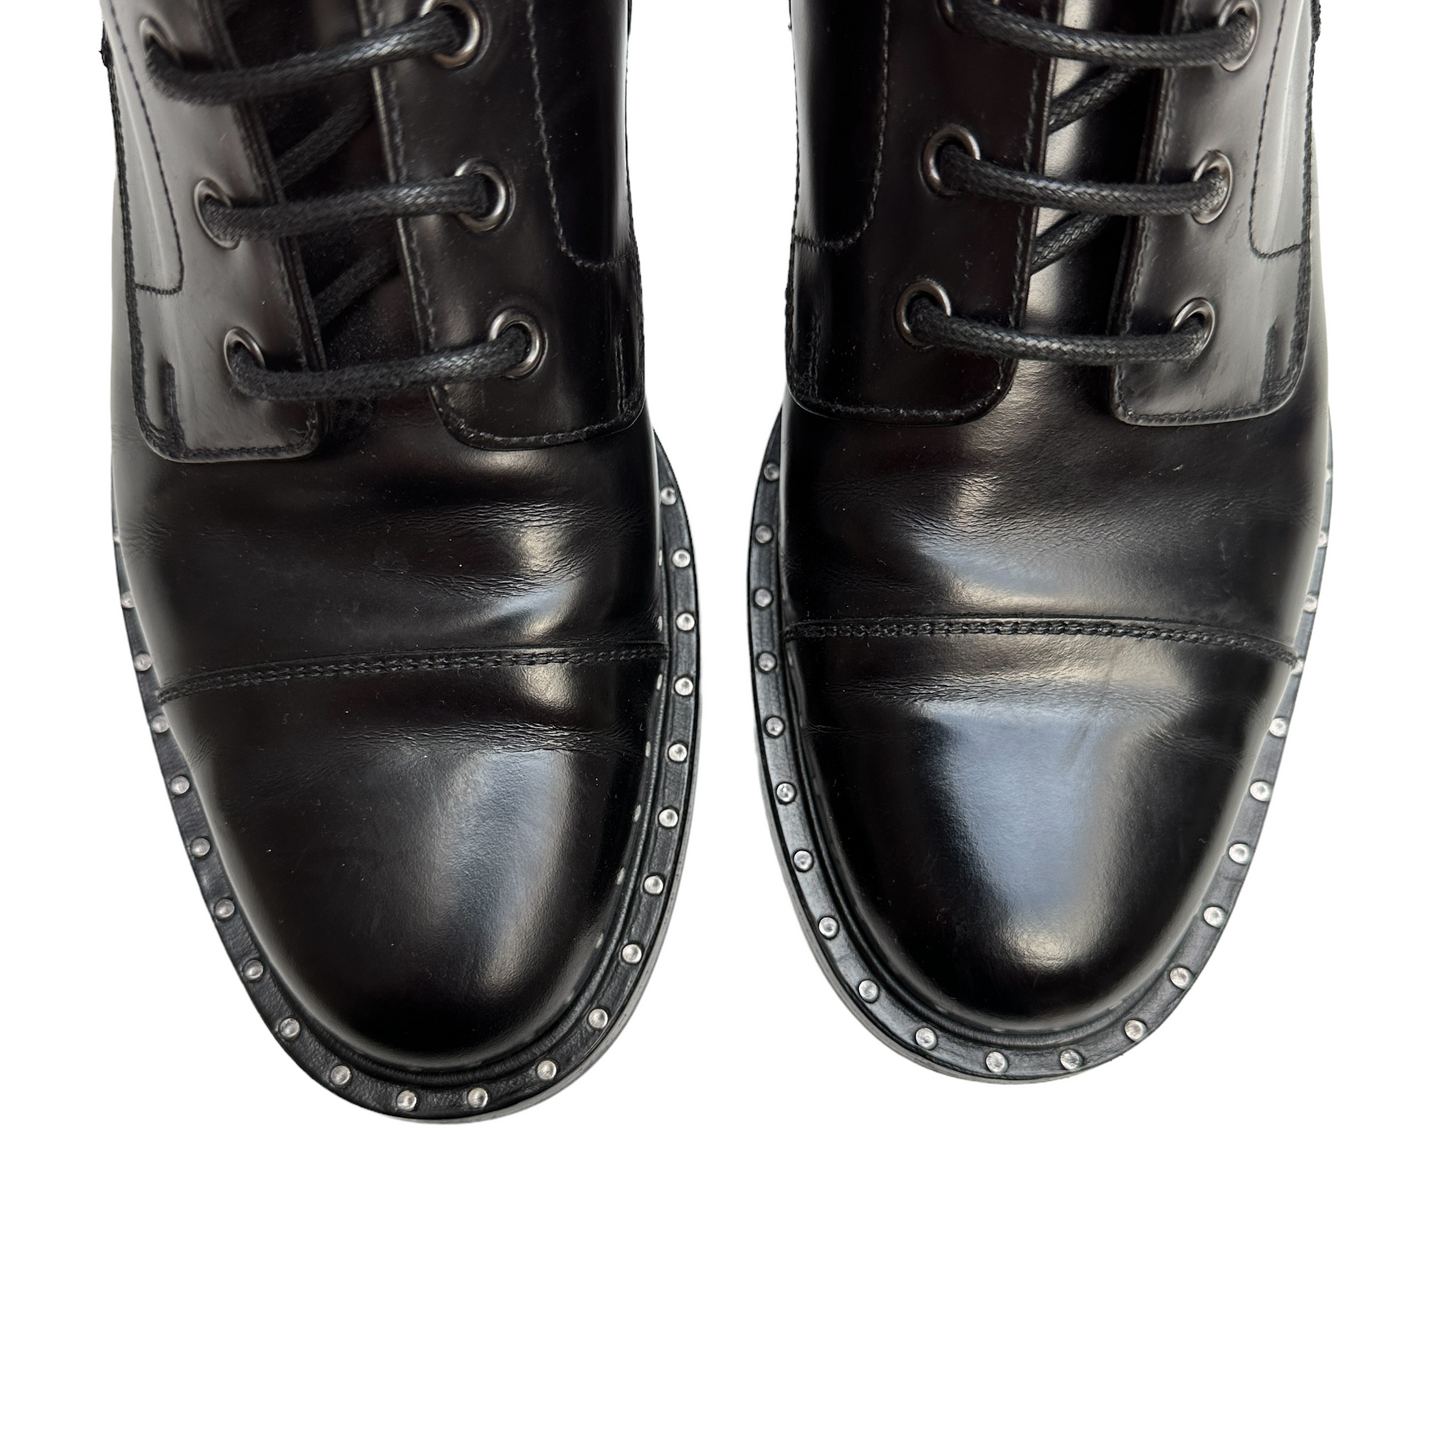 Black Leather Combat Boots - 8